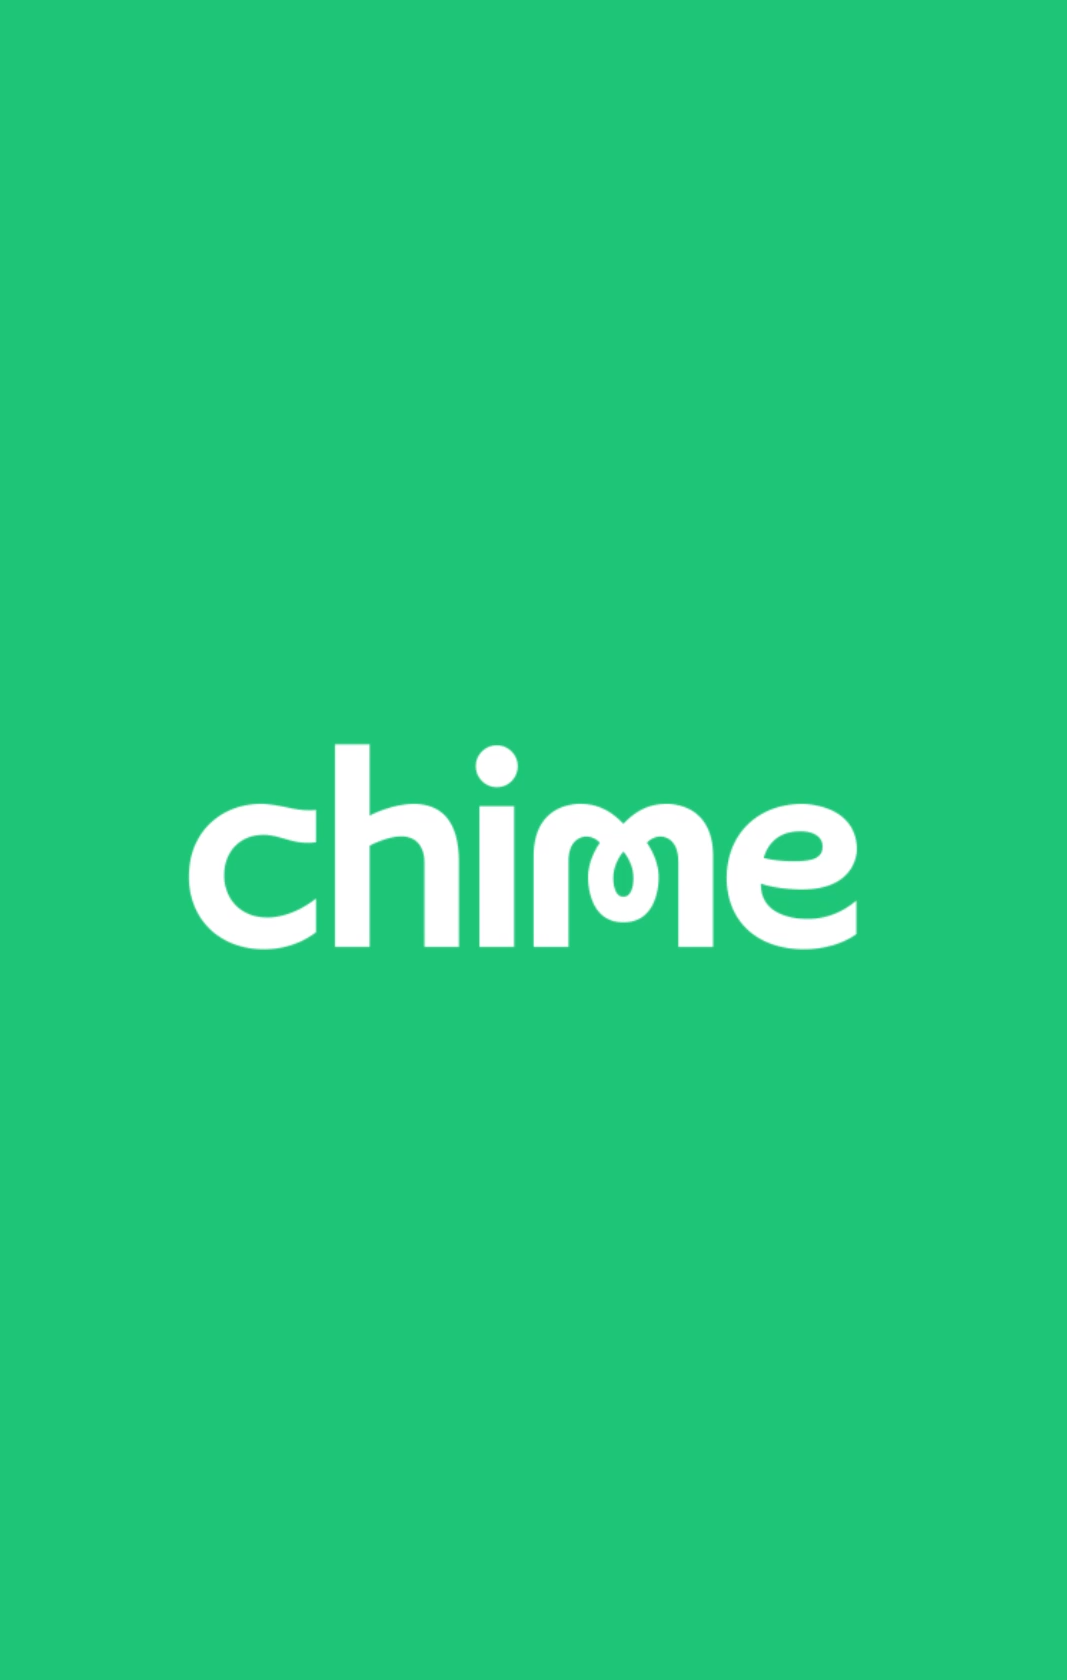 Chime's logo